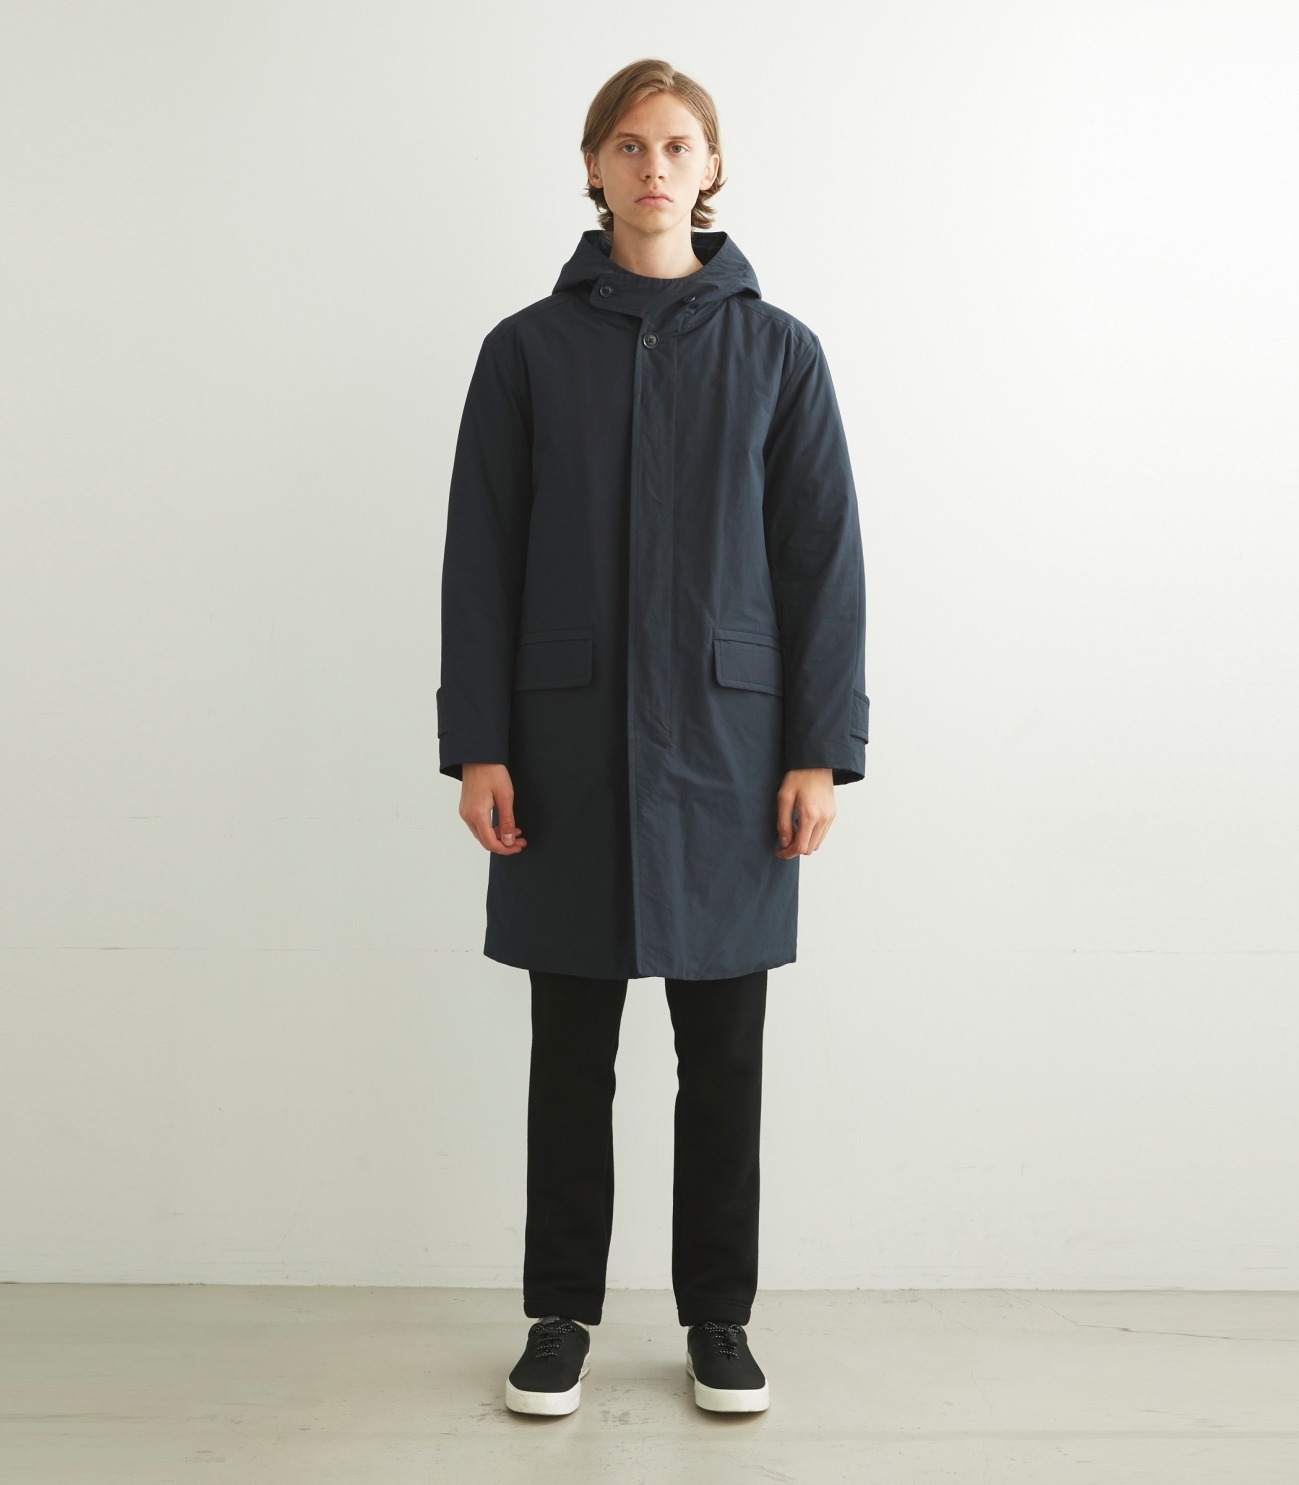 Men's hide taffeta hooded coat 詳細画像 navy 2